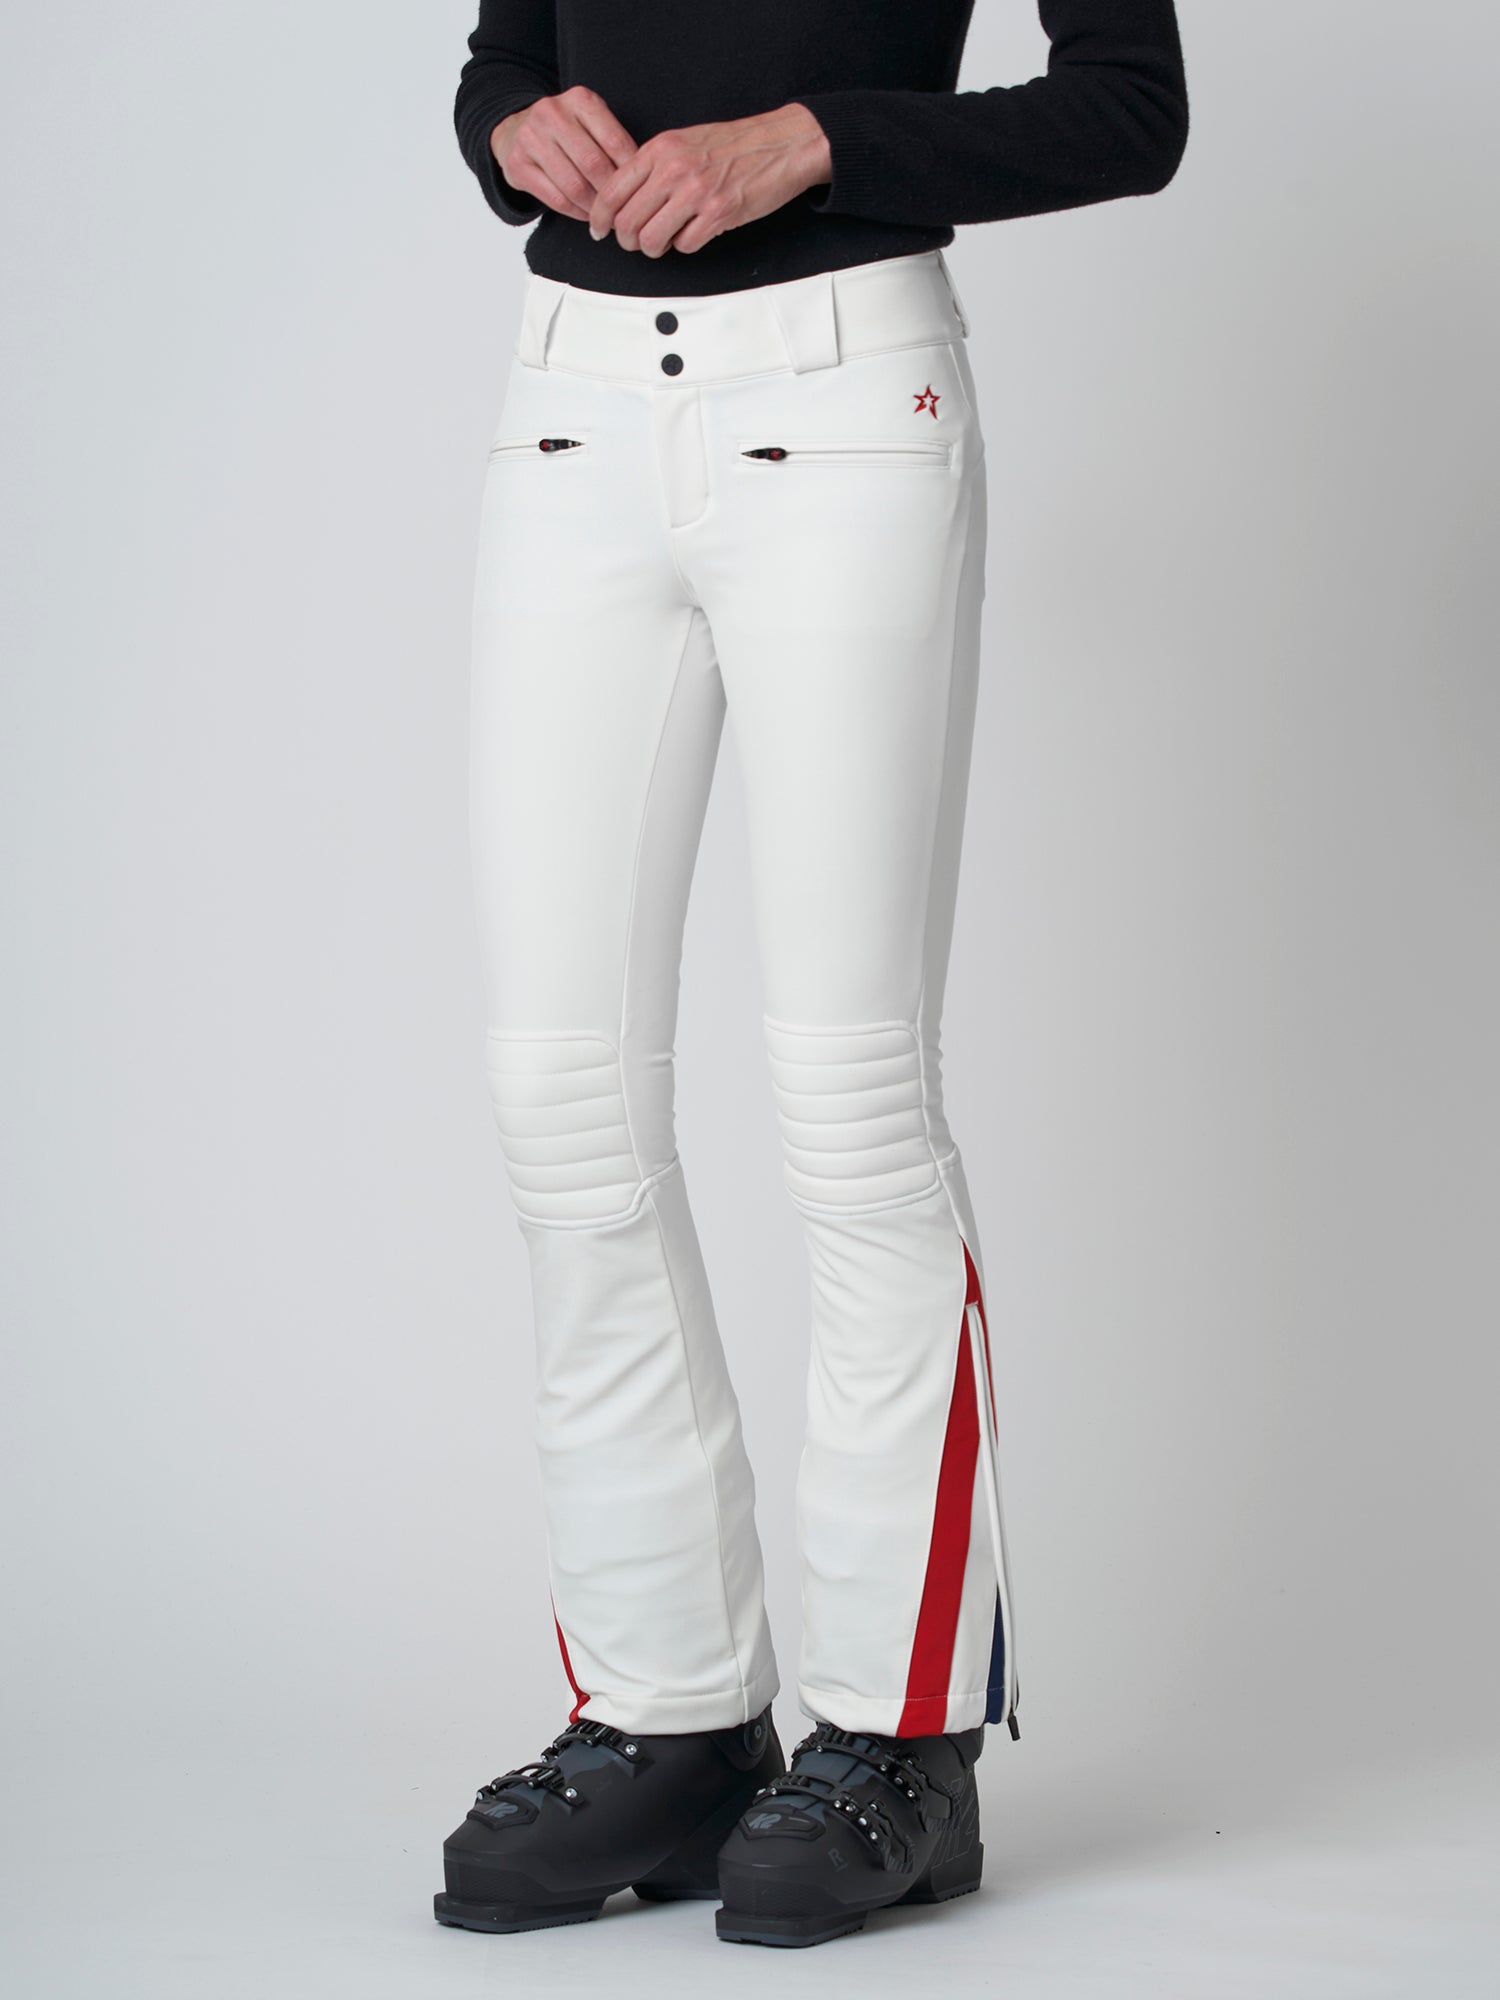 Peak Performance Slim Fit Stretch Ski Snow Pants Women's Size: XS-S / US  2-4